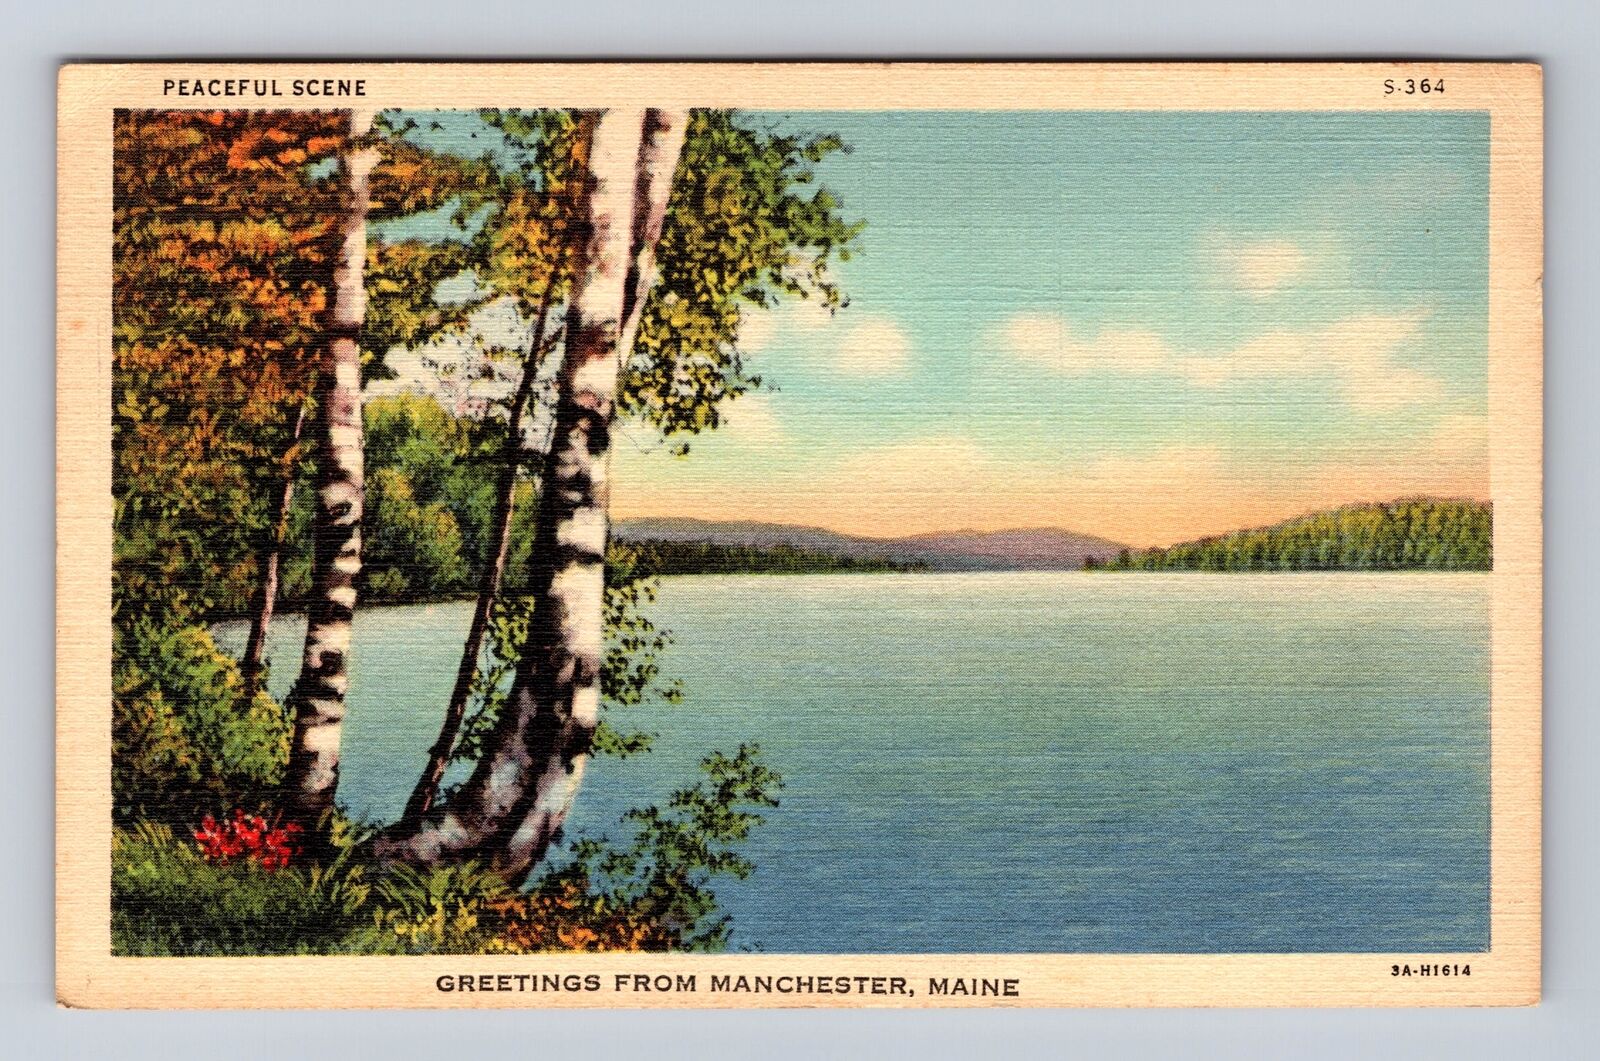 Manchester ME-Maine, General Greetings Peaceful Scene, Vintage c1940 Postcard